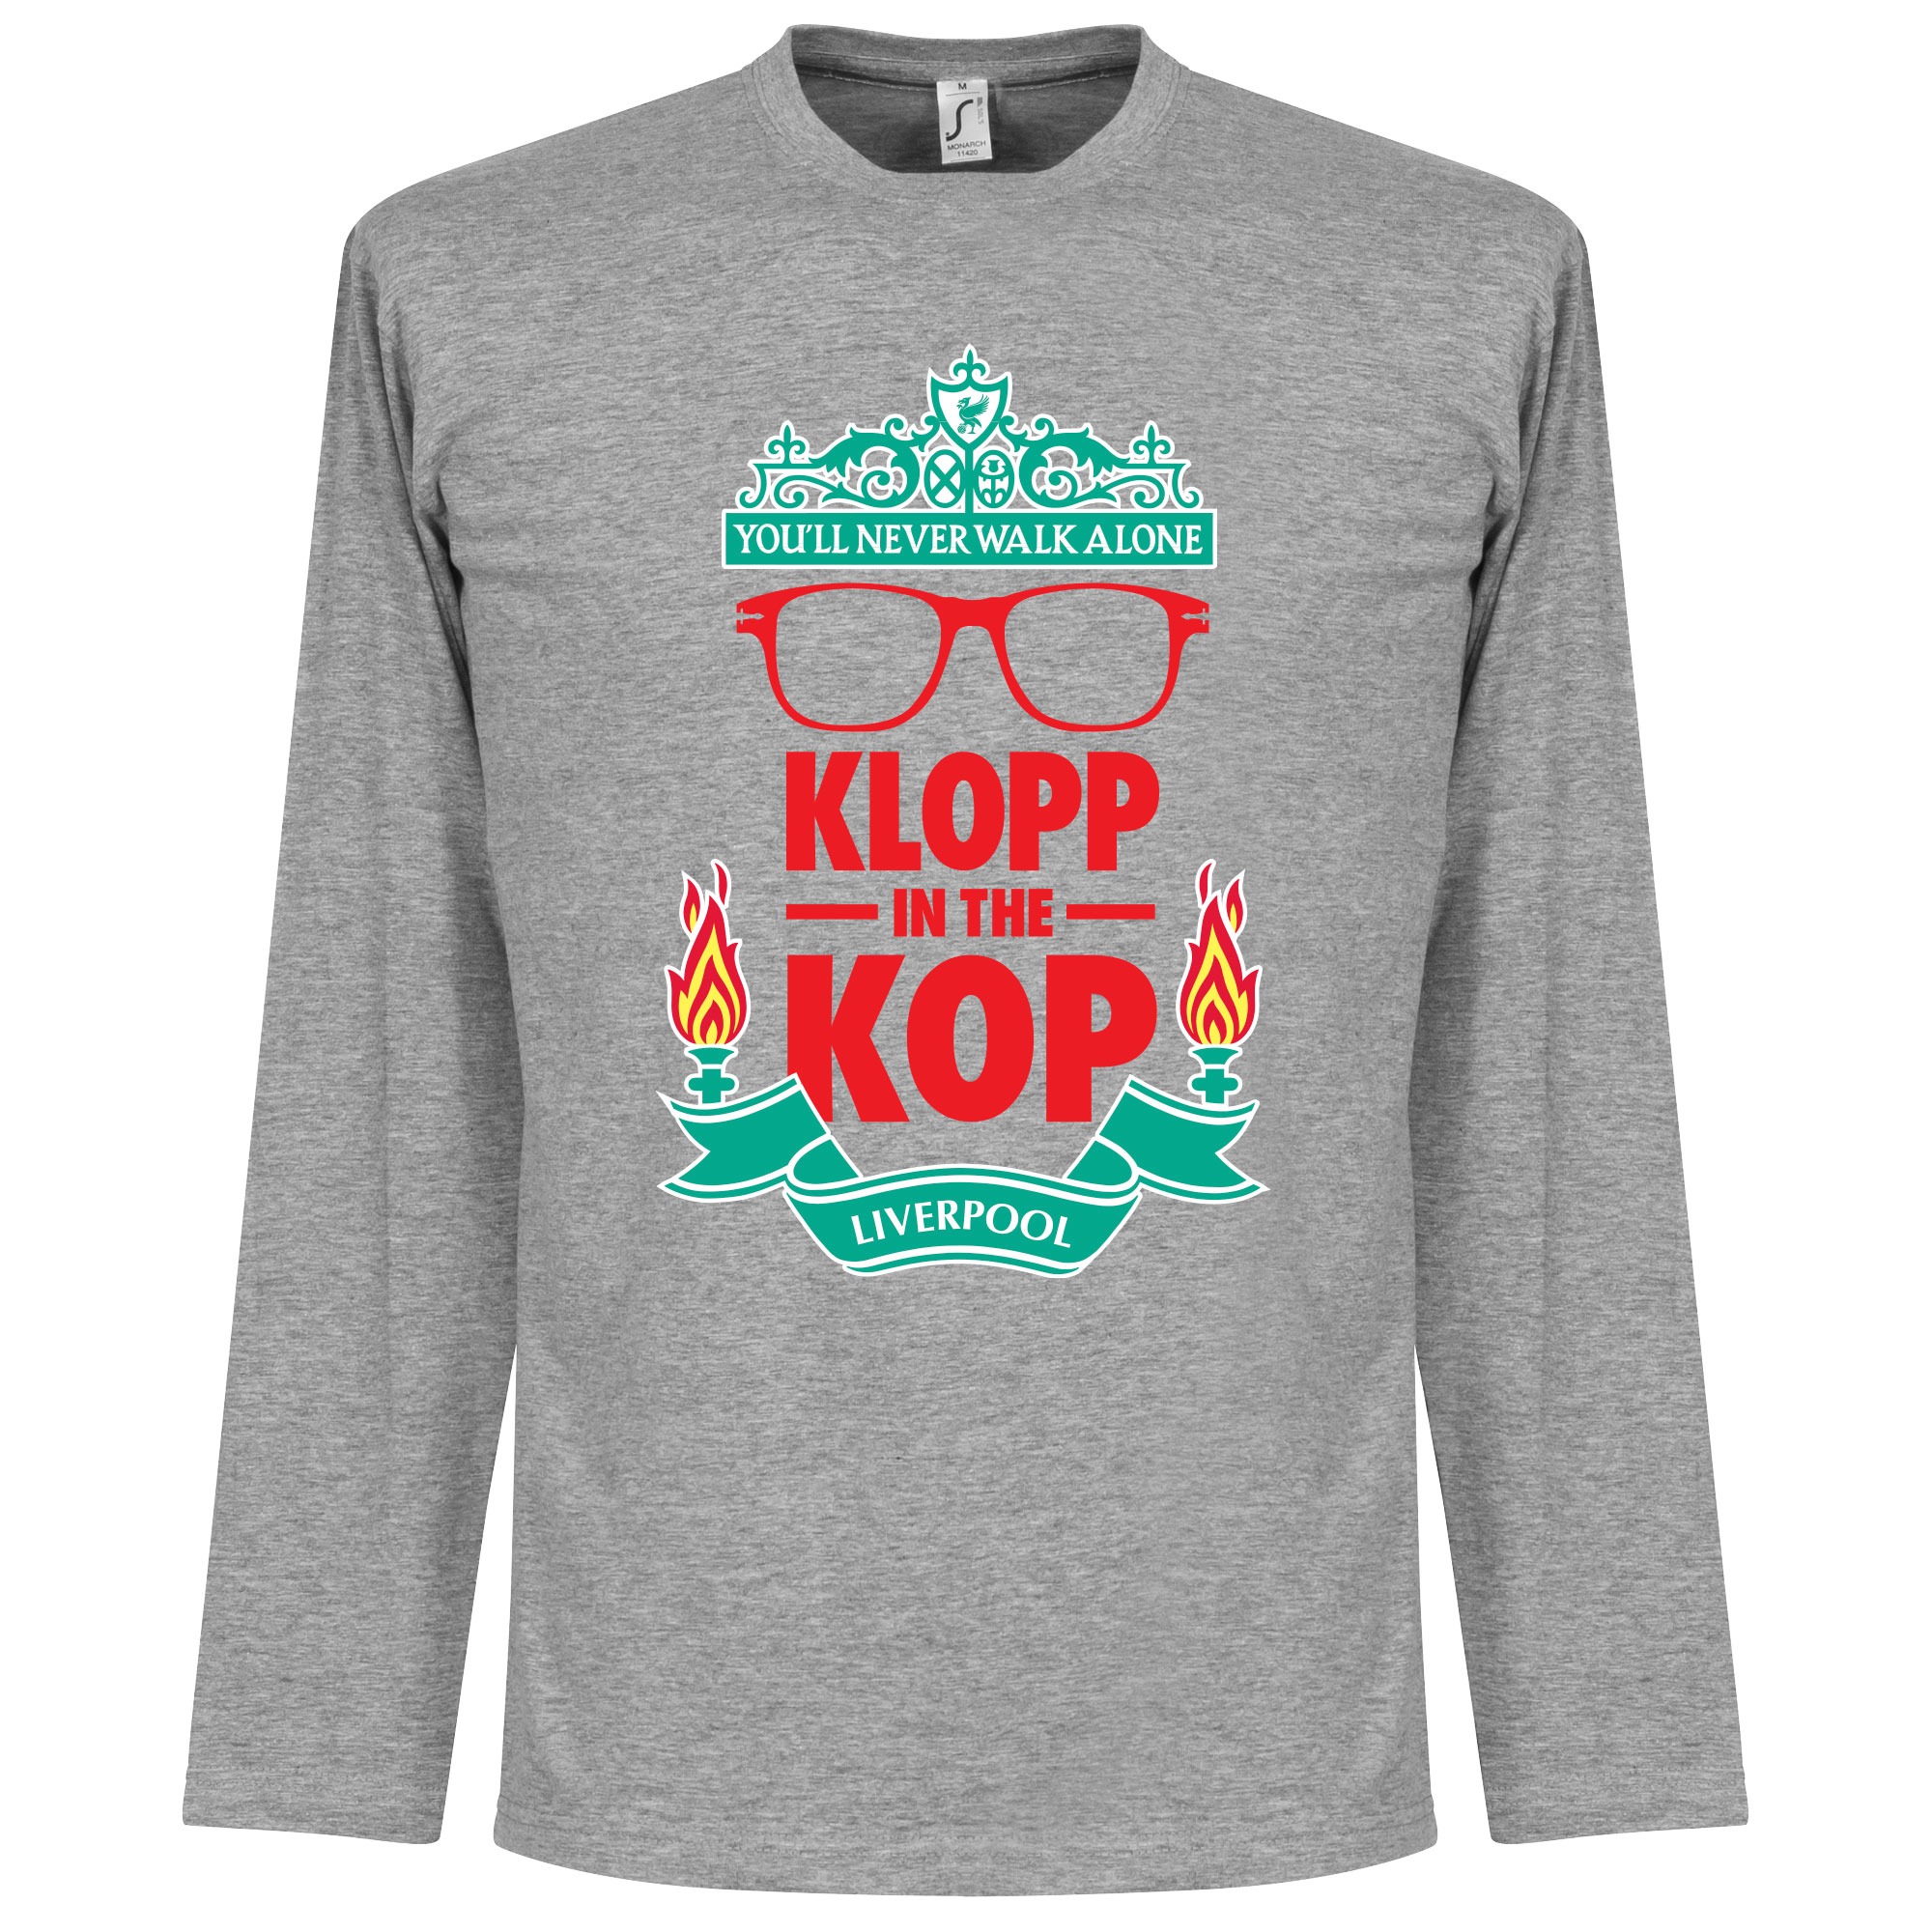 Klopp on the Kop Longsleeve T-Shirt S